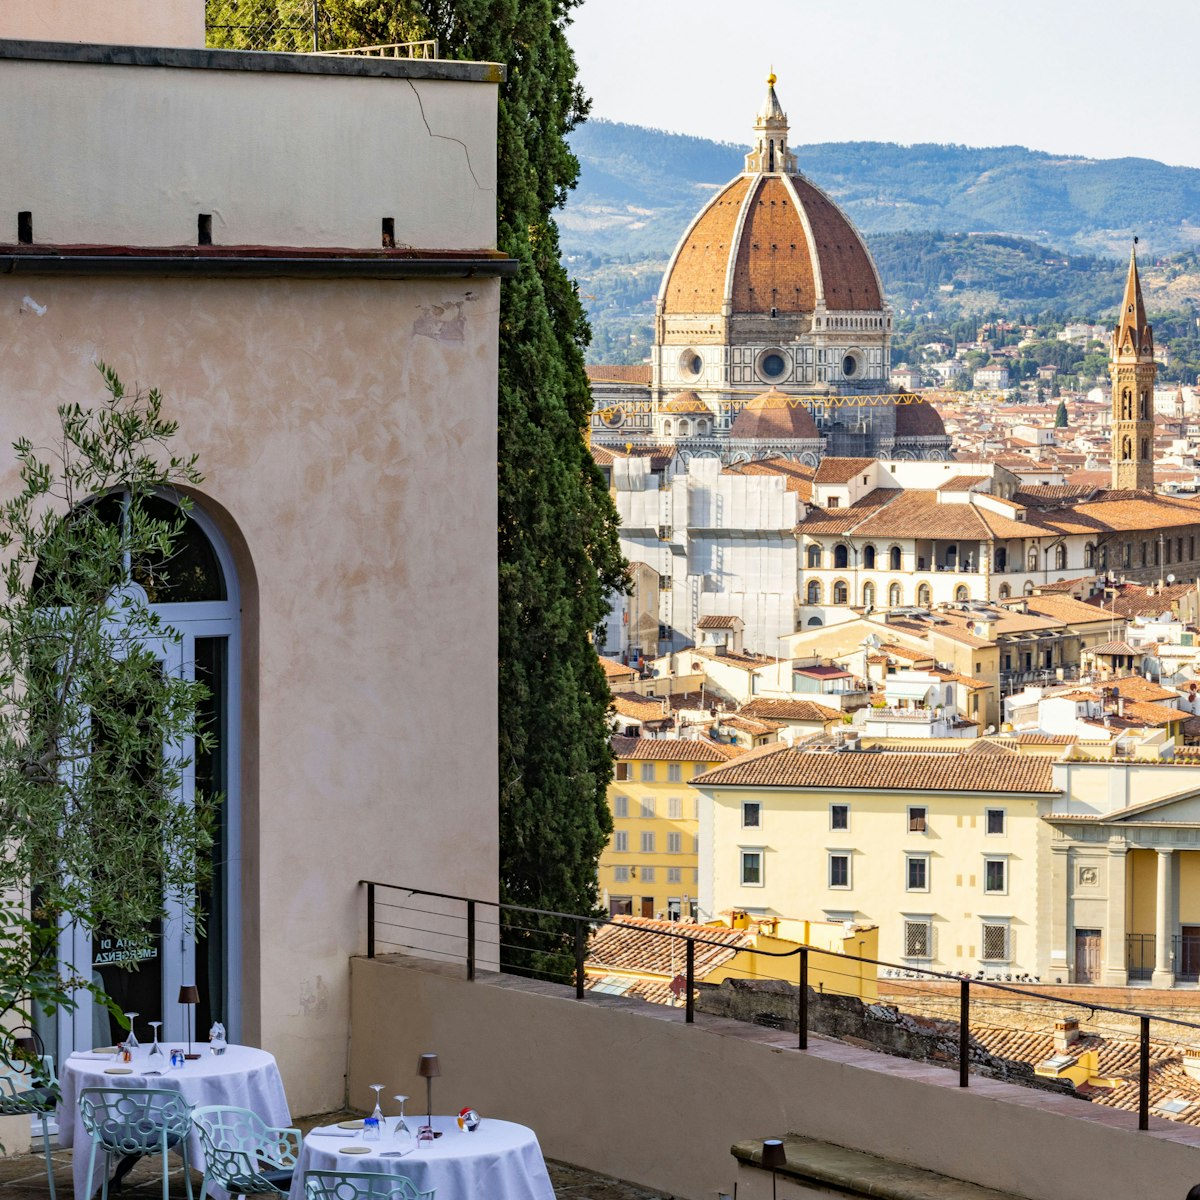 La Leggenda dei Frati Innovative takes on classic Italian cuisine in an elegant dining room & on a patio with city views.